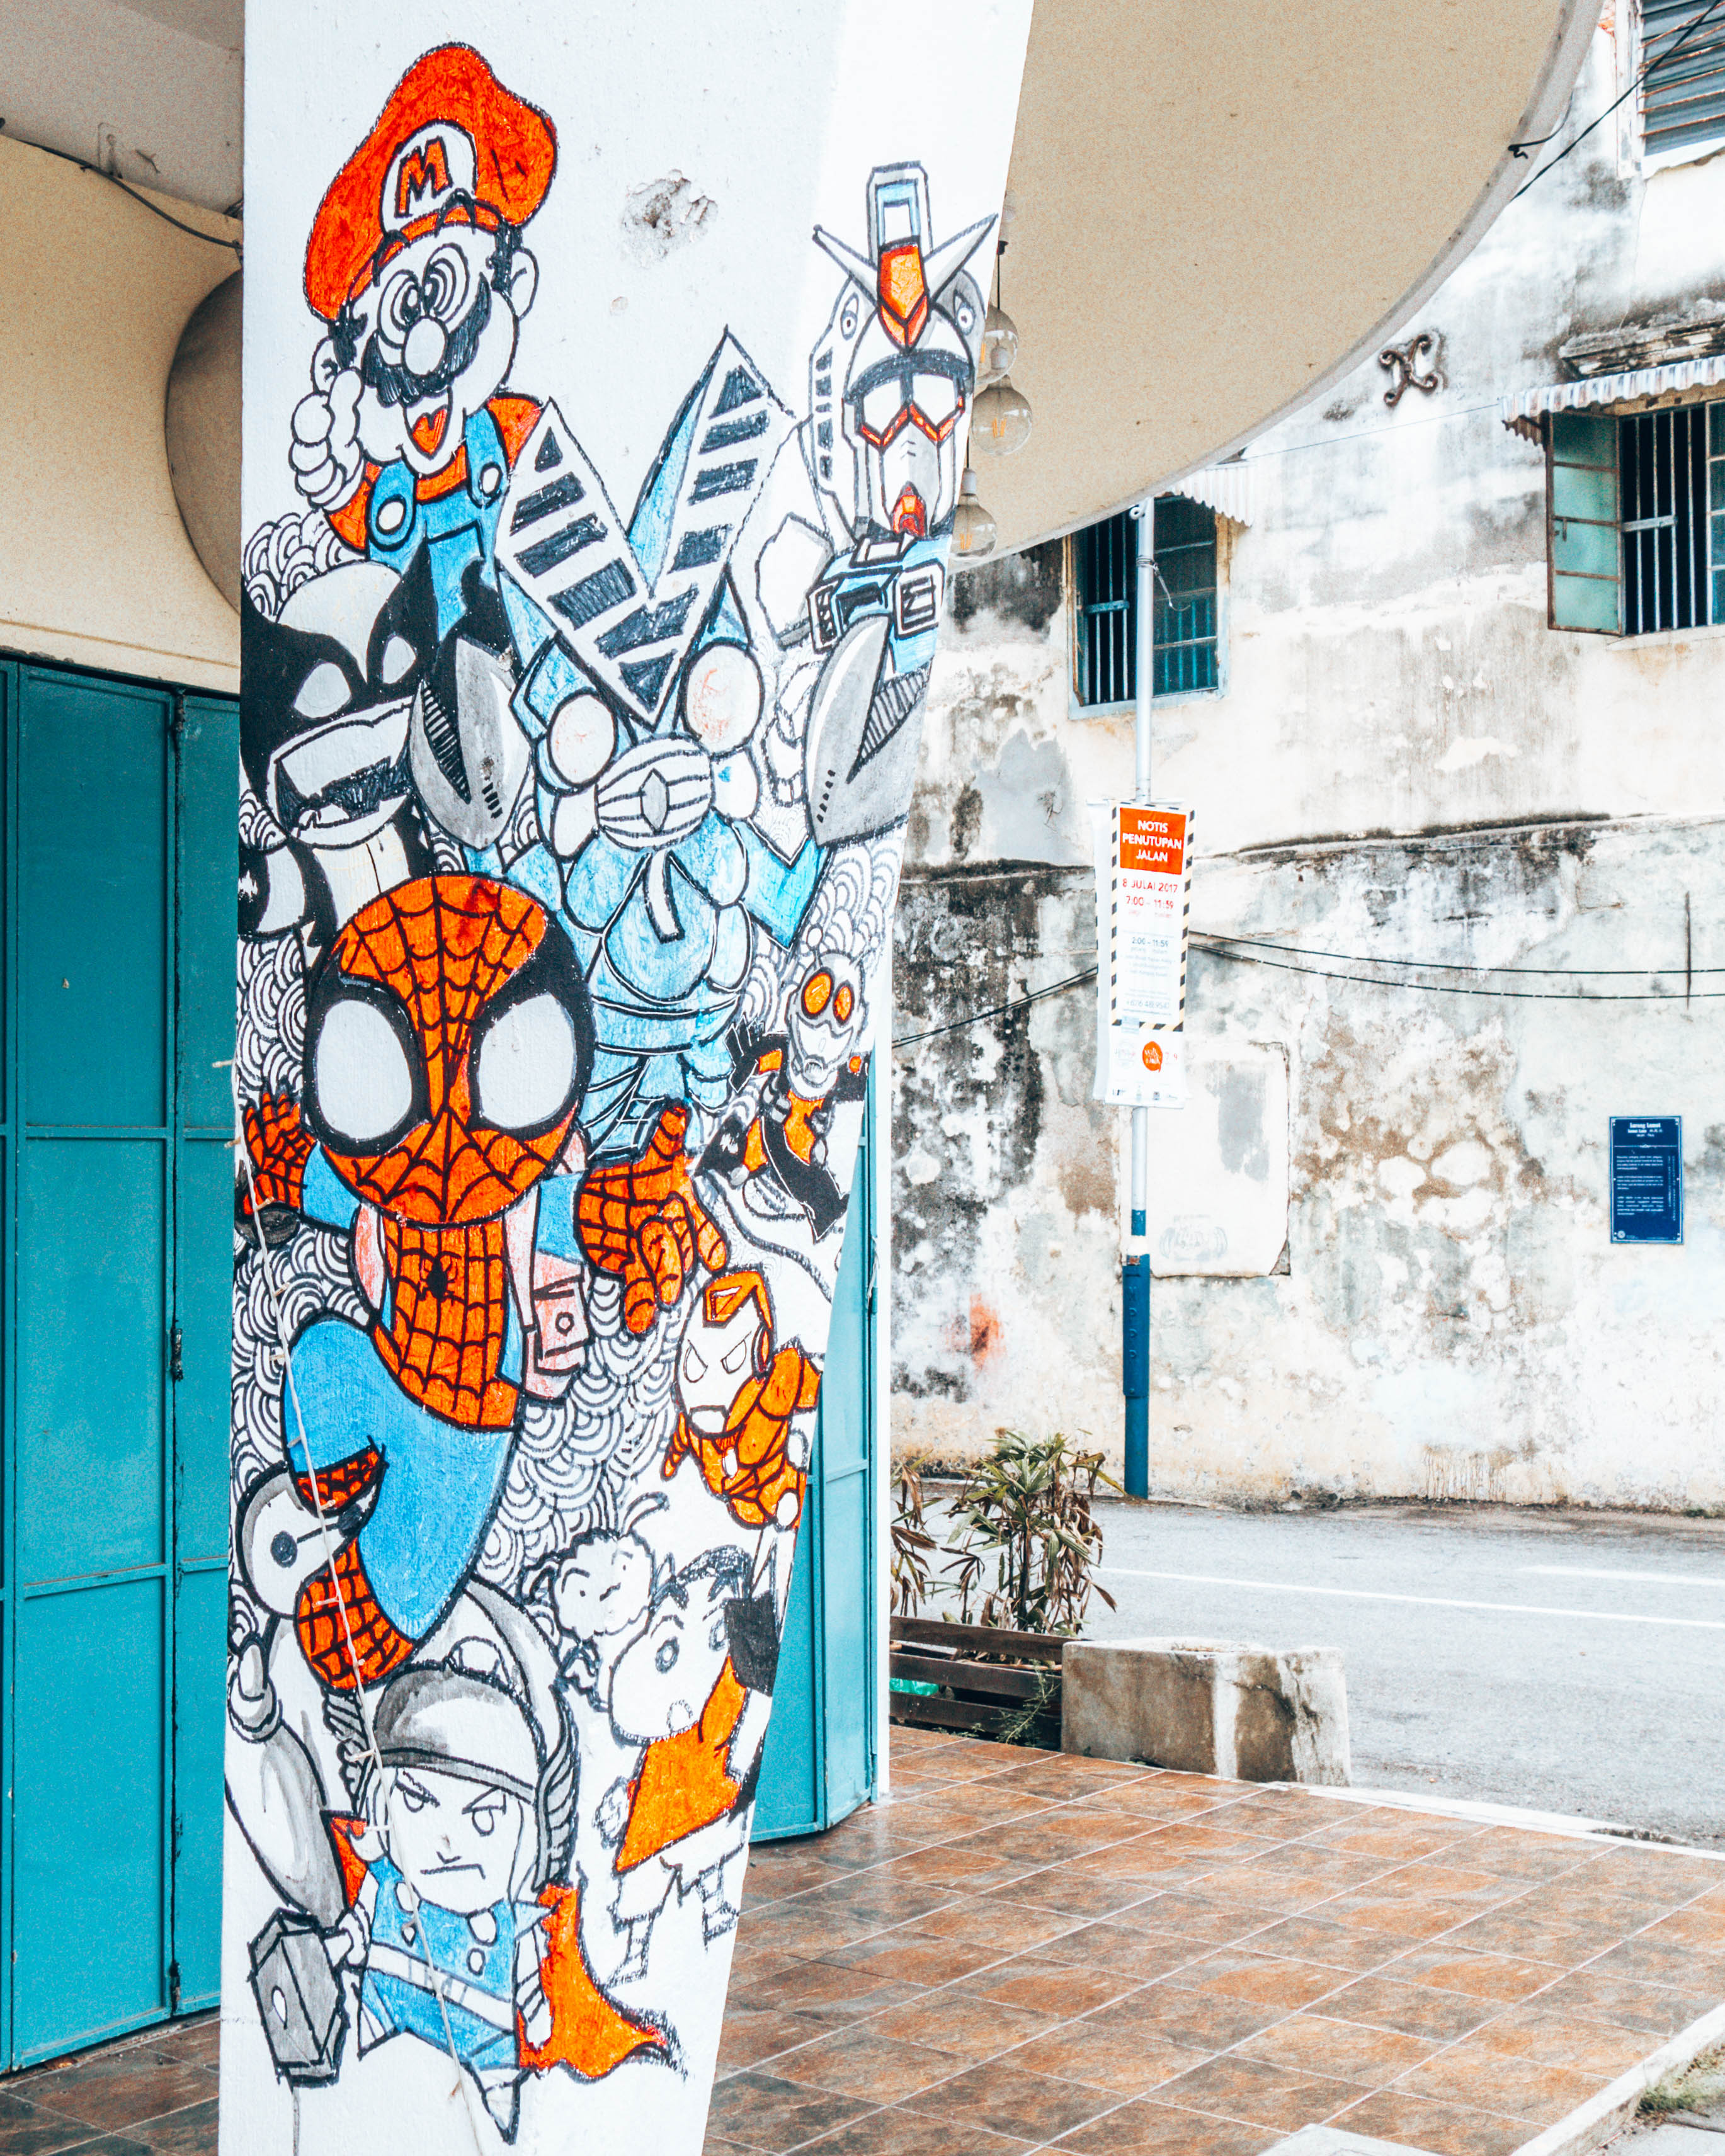 Hotel and restaurant street art. Penang, Georgetown, Malaysia - Wediditourway.com